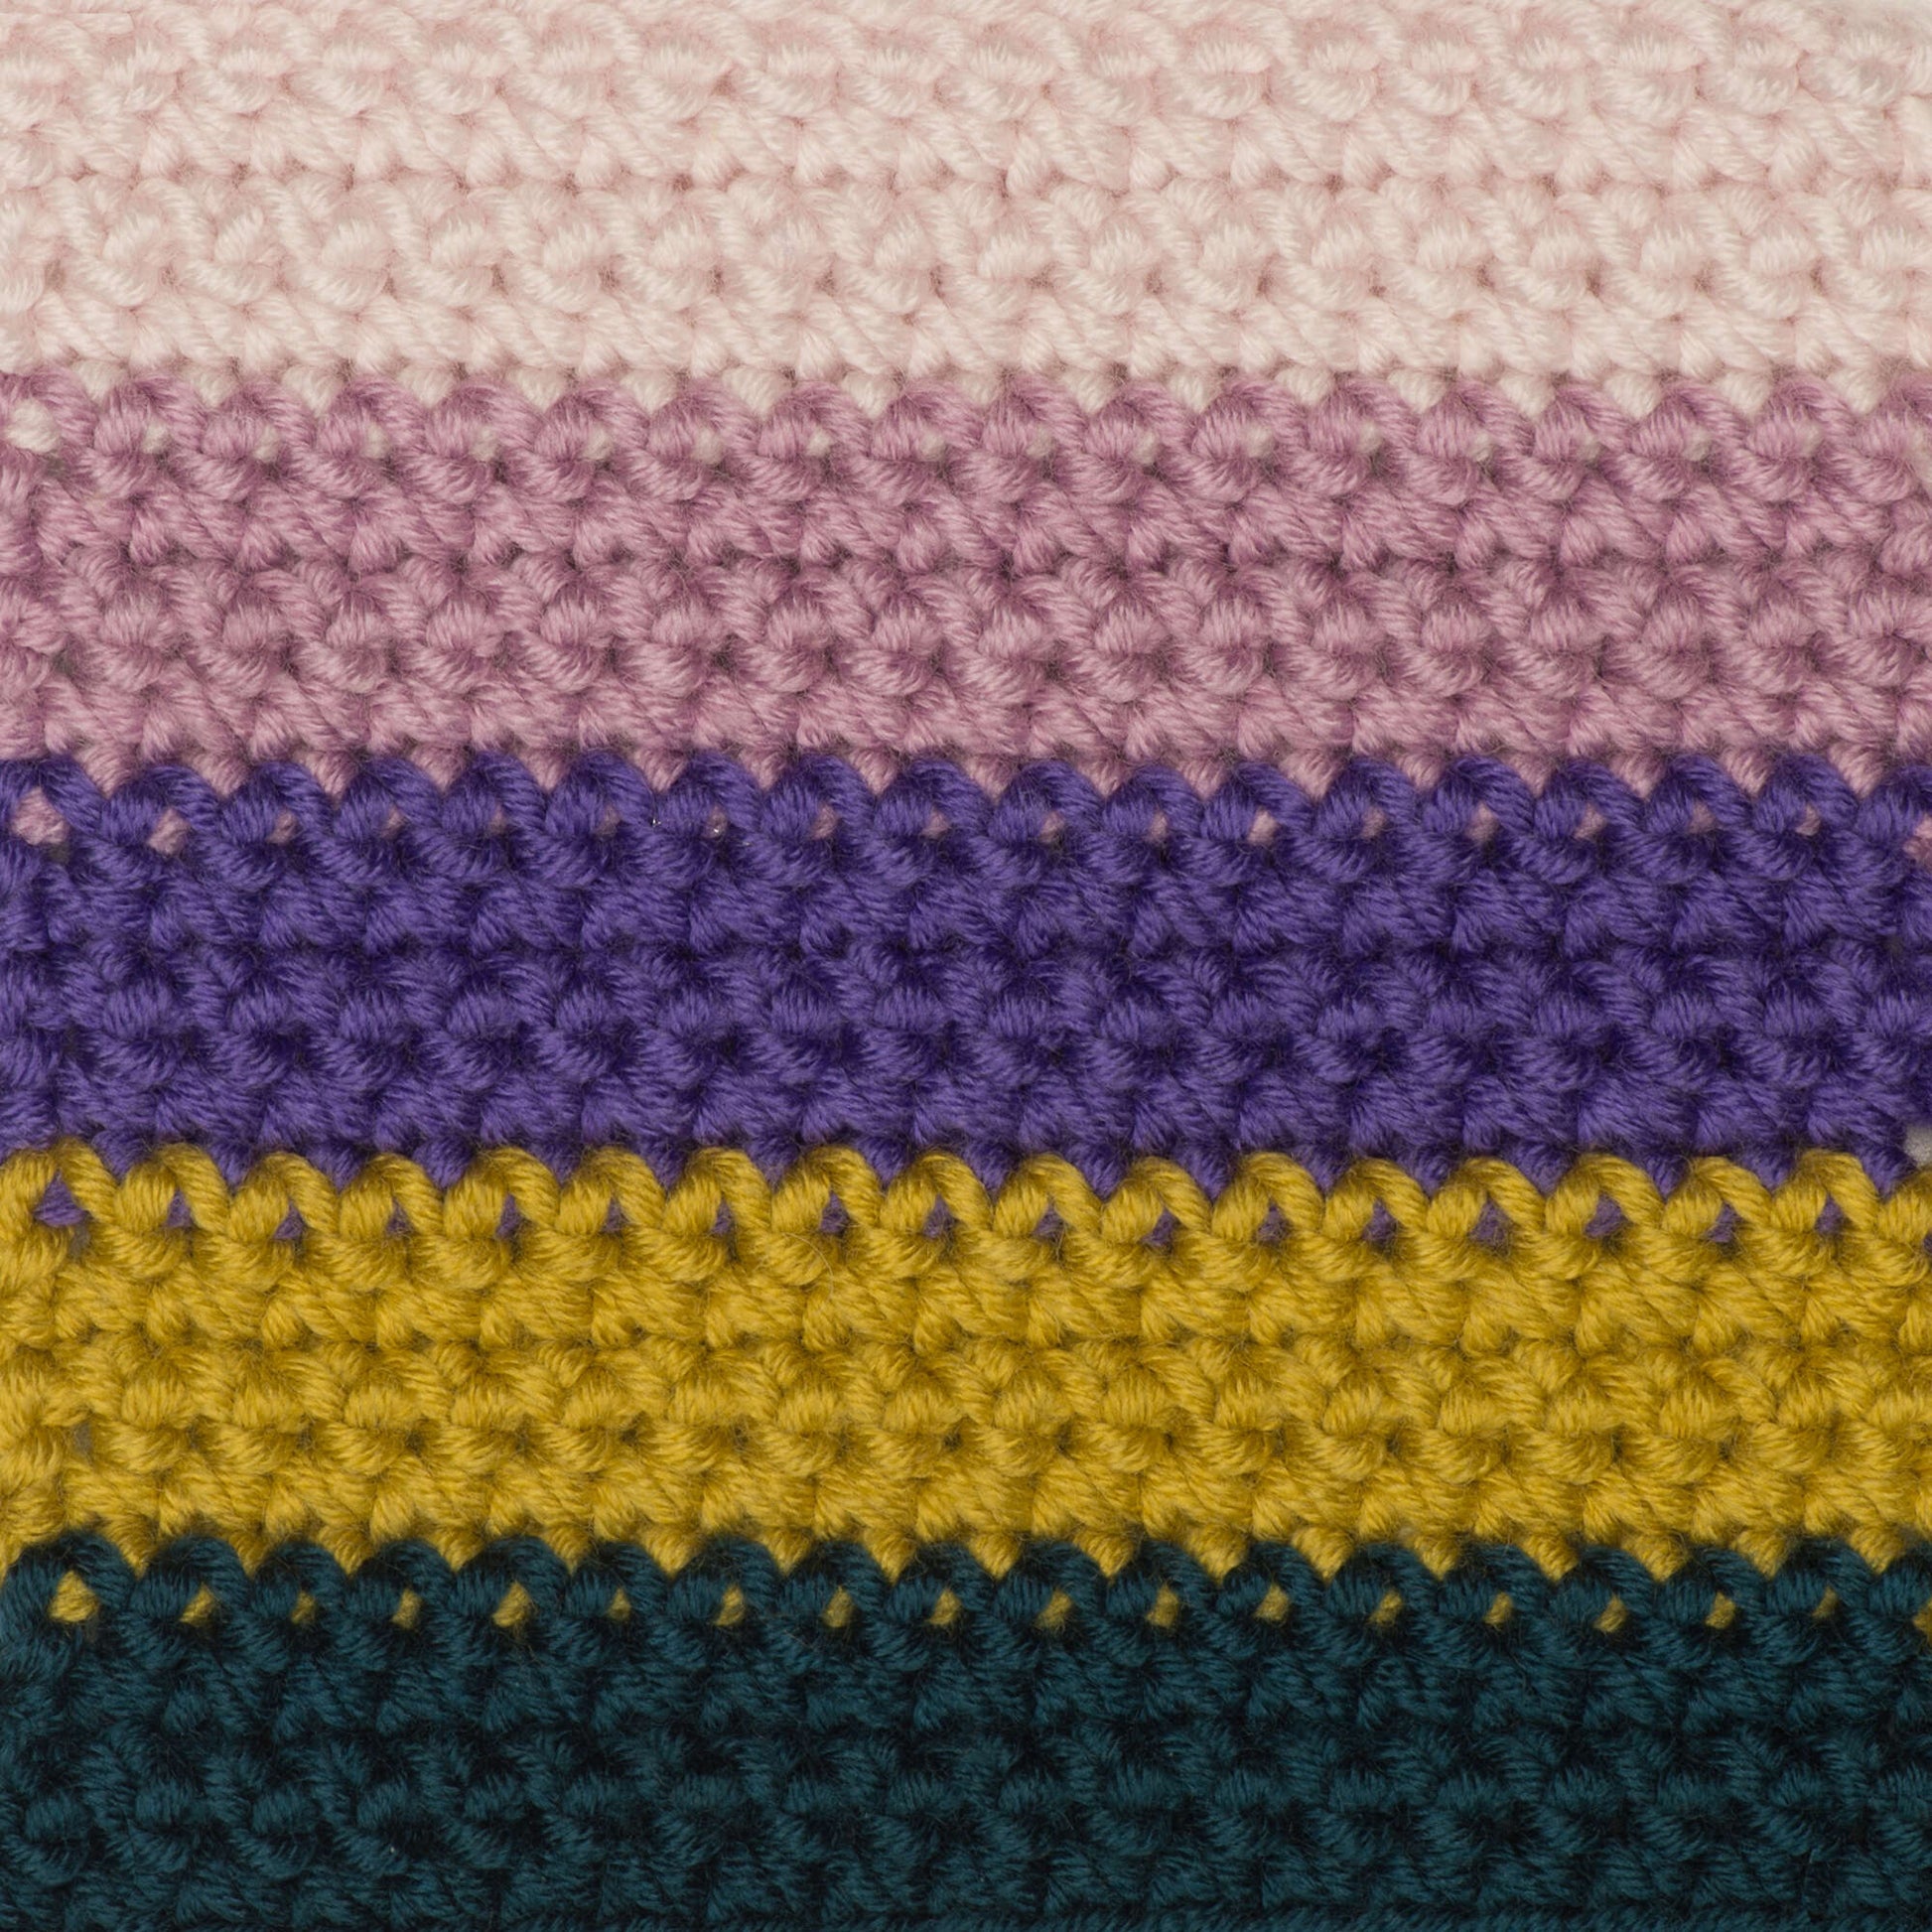 Caron x Pantone Yarn - Discontinued Shades Purple Pops